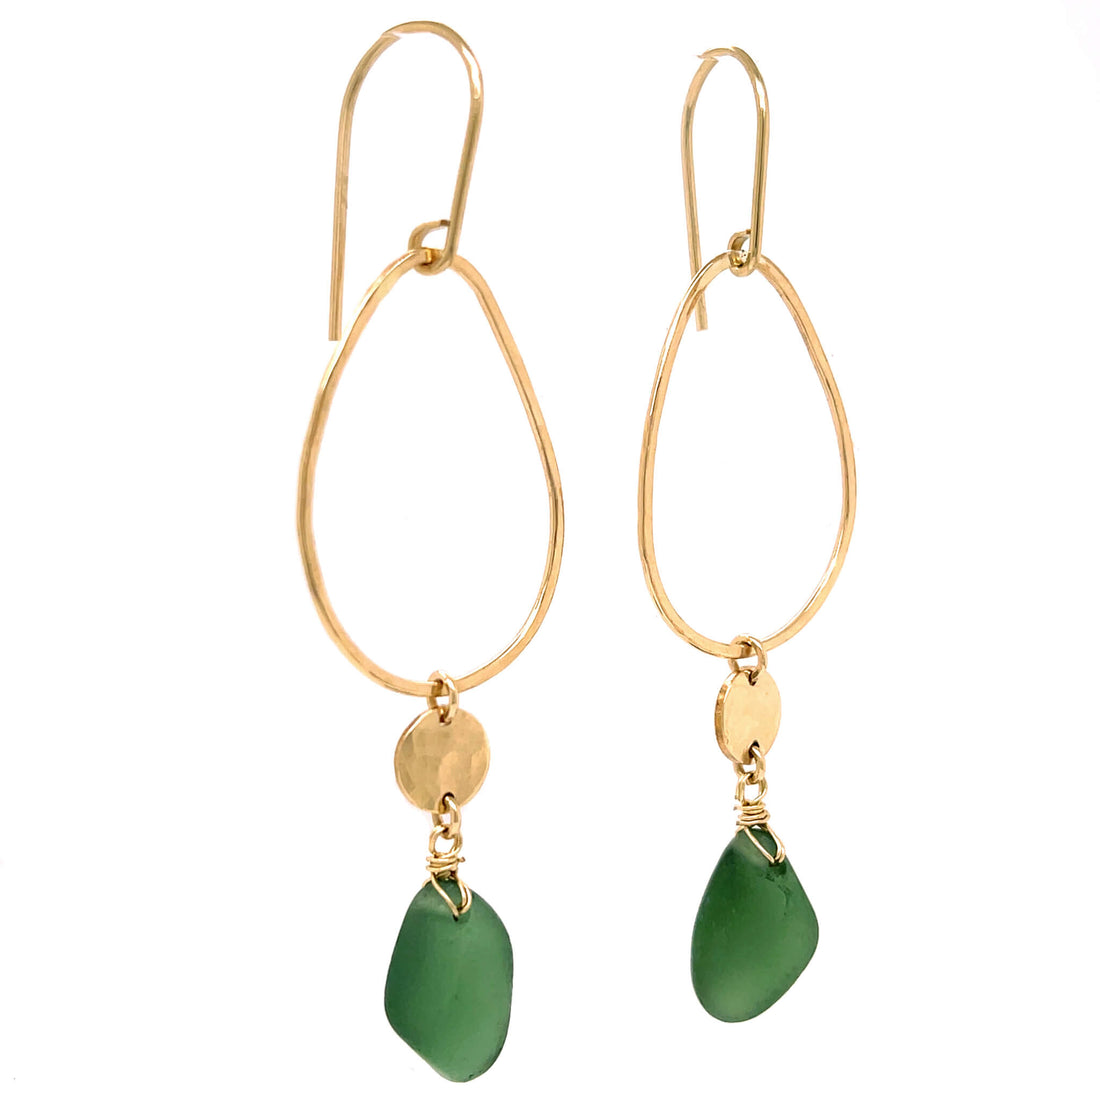 emerald green sea glass and gold earrings disc earrings statement jewellery Kriket Broadhurst 